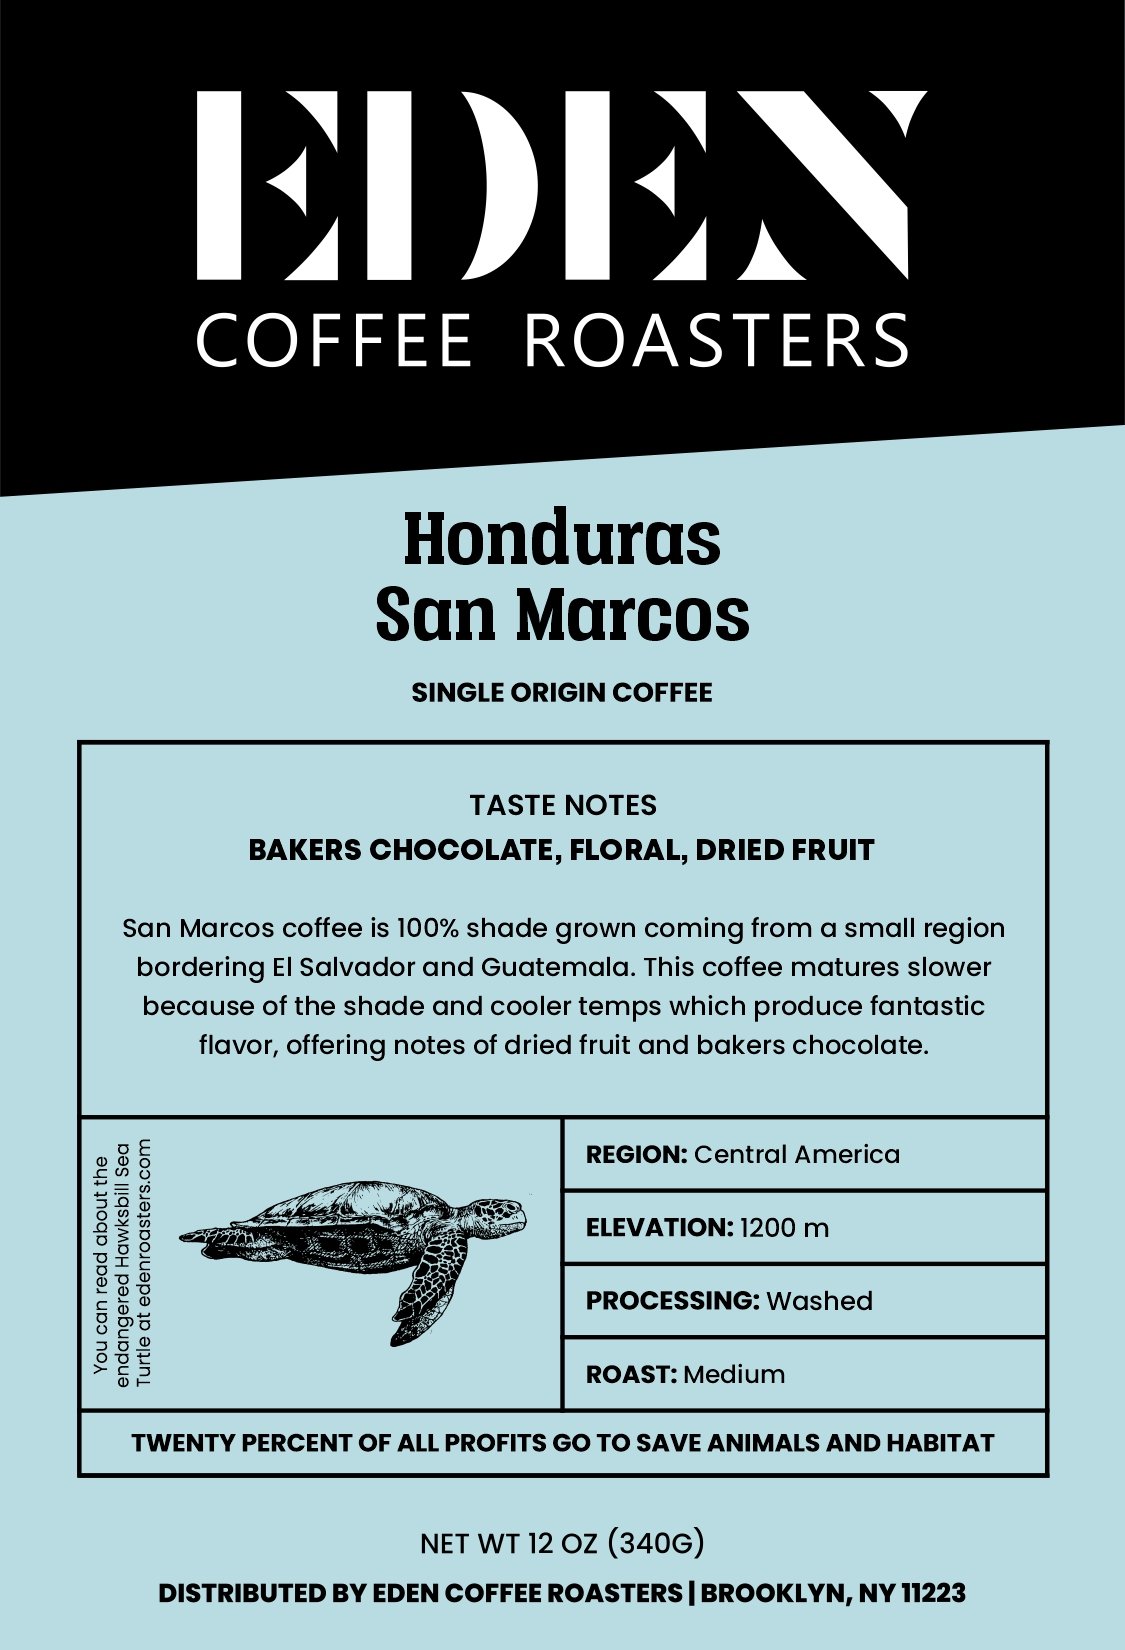 HONDURAS, SAN MARCOS - Eden Coffee Roasters